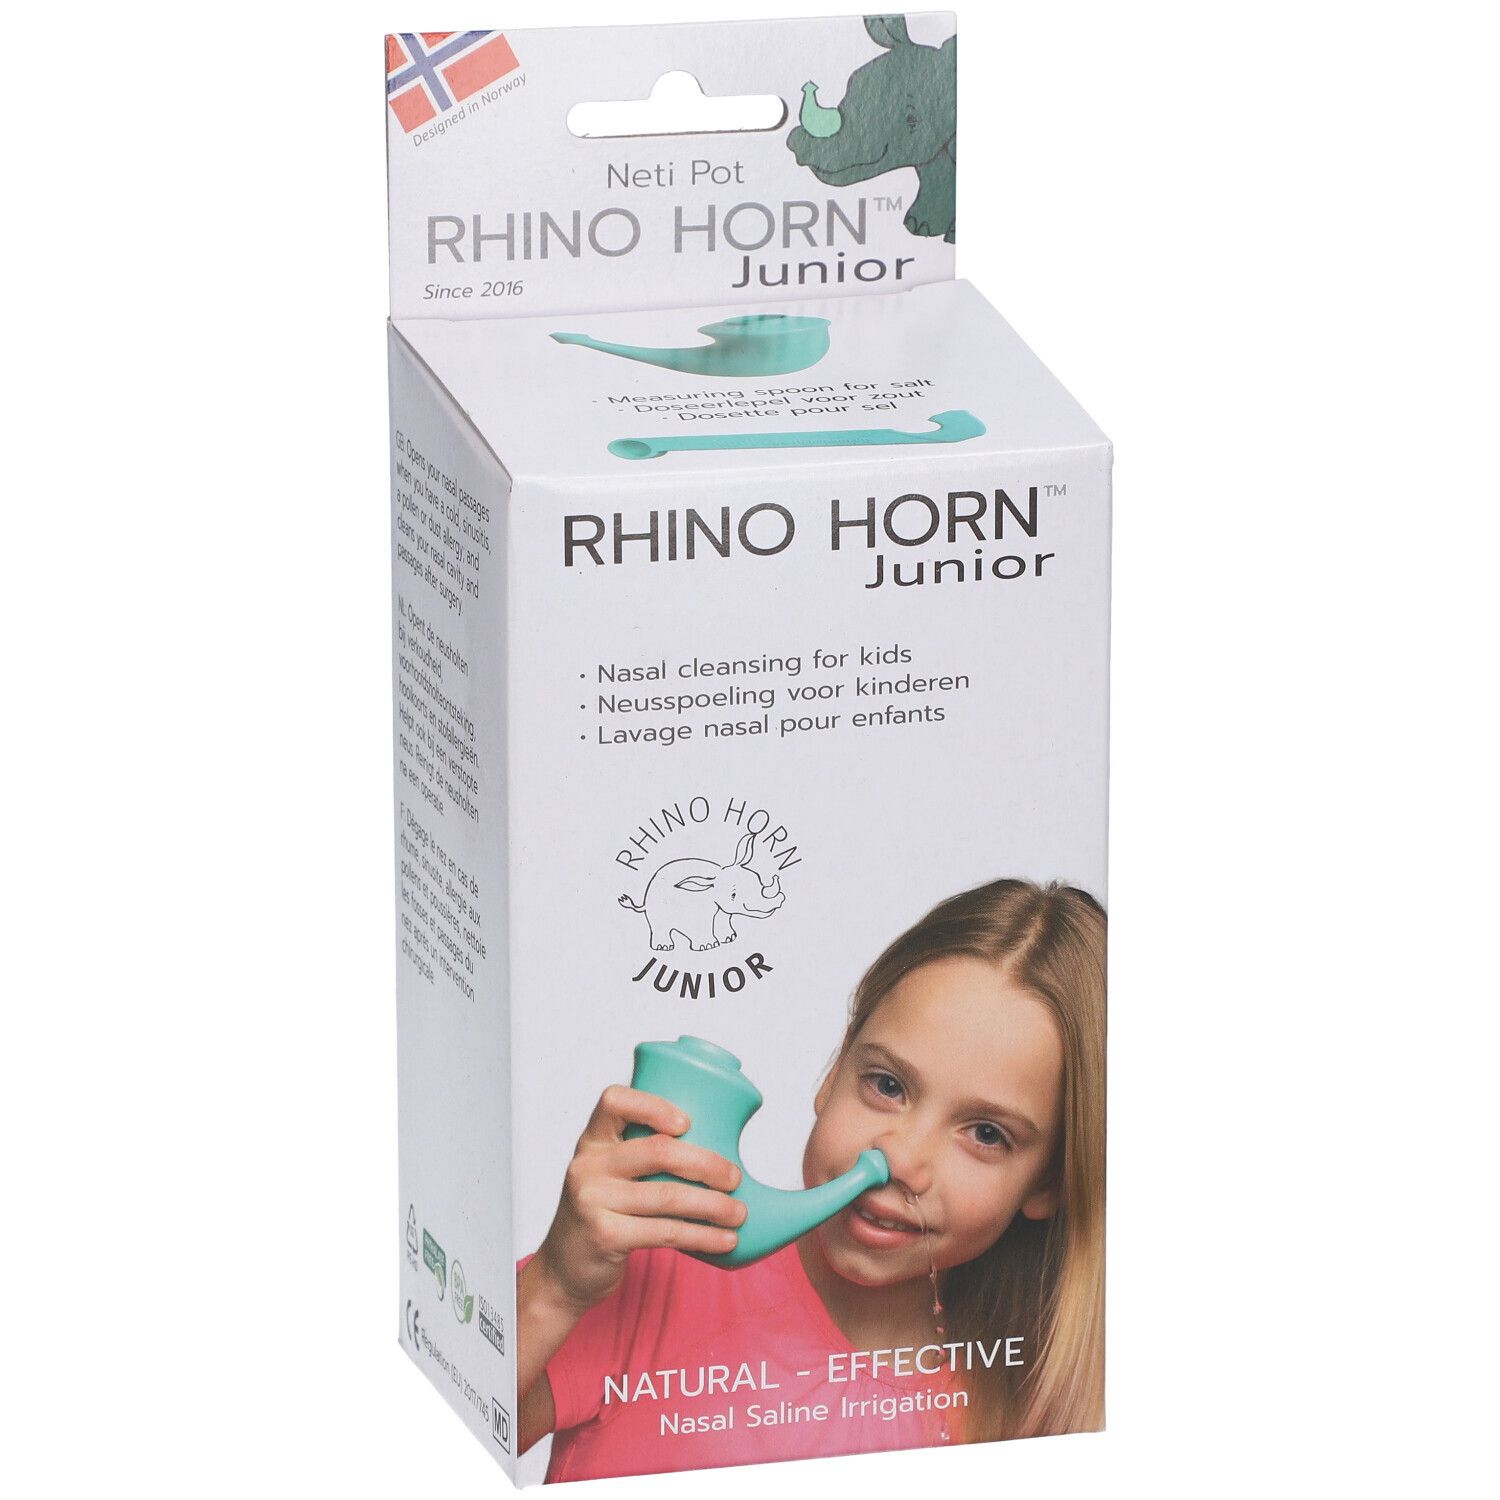 Rhino Horn Junior Lavage Nasal Pour Enfants